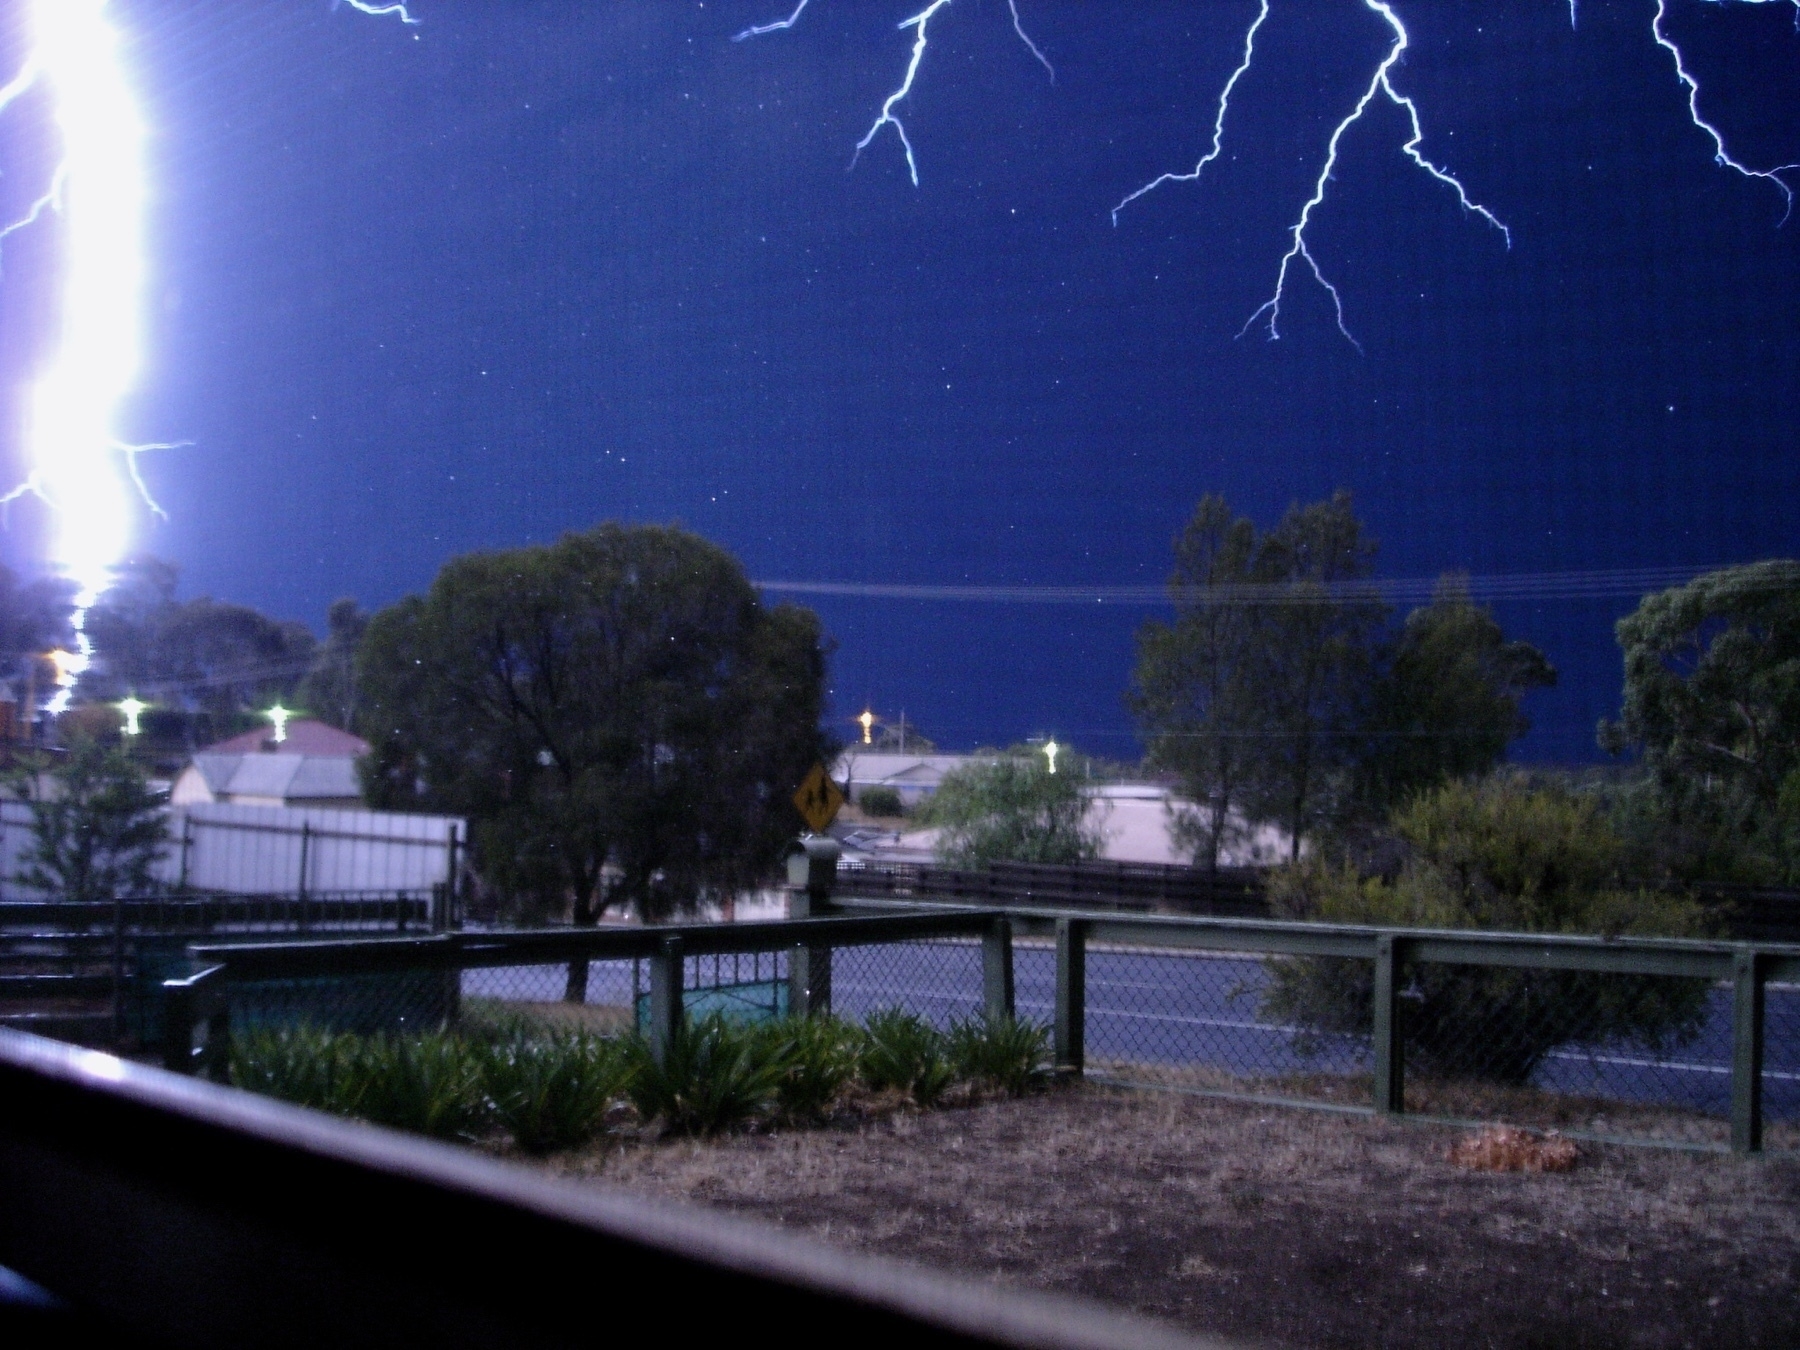 Lightning striking close to the ground near a surburban street. 